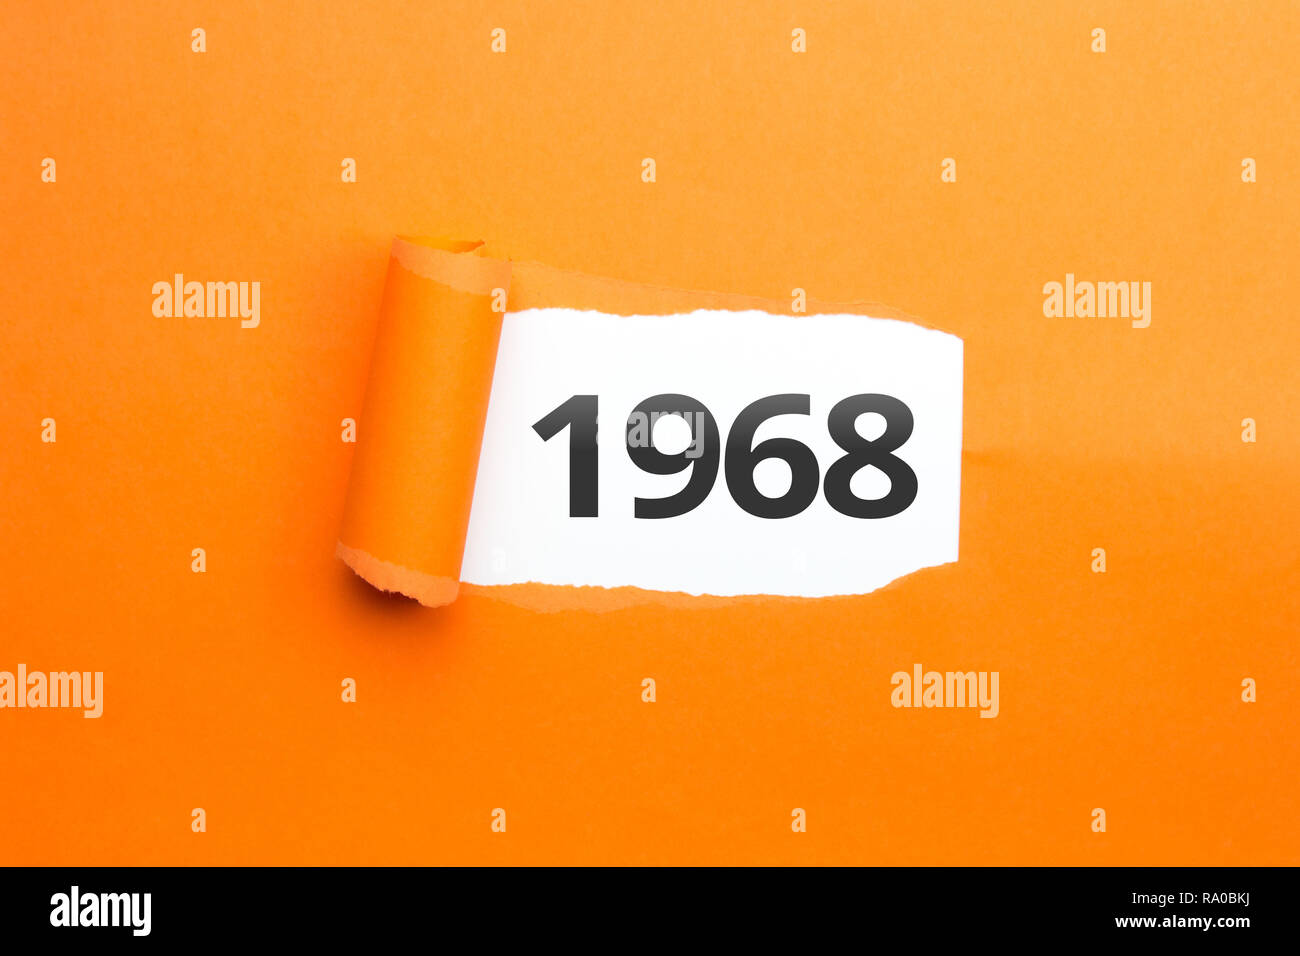 surprising Number / Year 1968 orange background Stock Photo